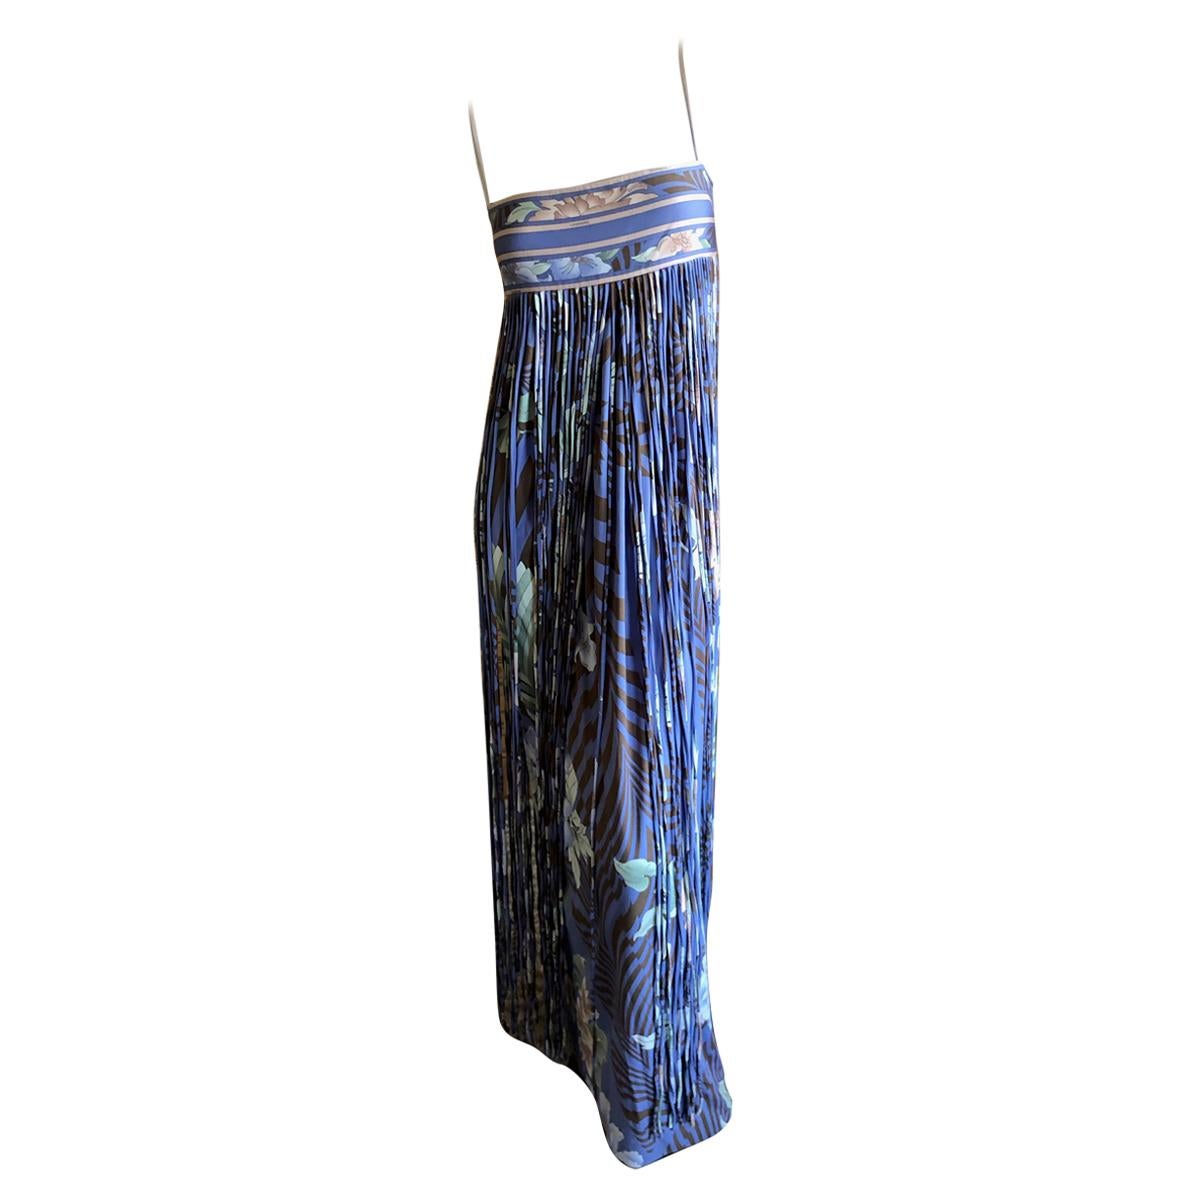 Leonard Paris Silk Jersey Unusual Vintage Long Evening Dress with Fringe For Sale